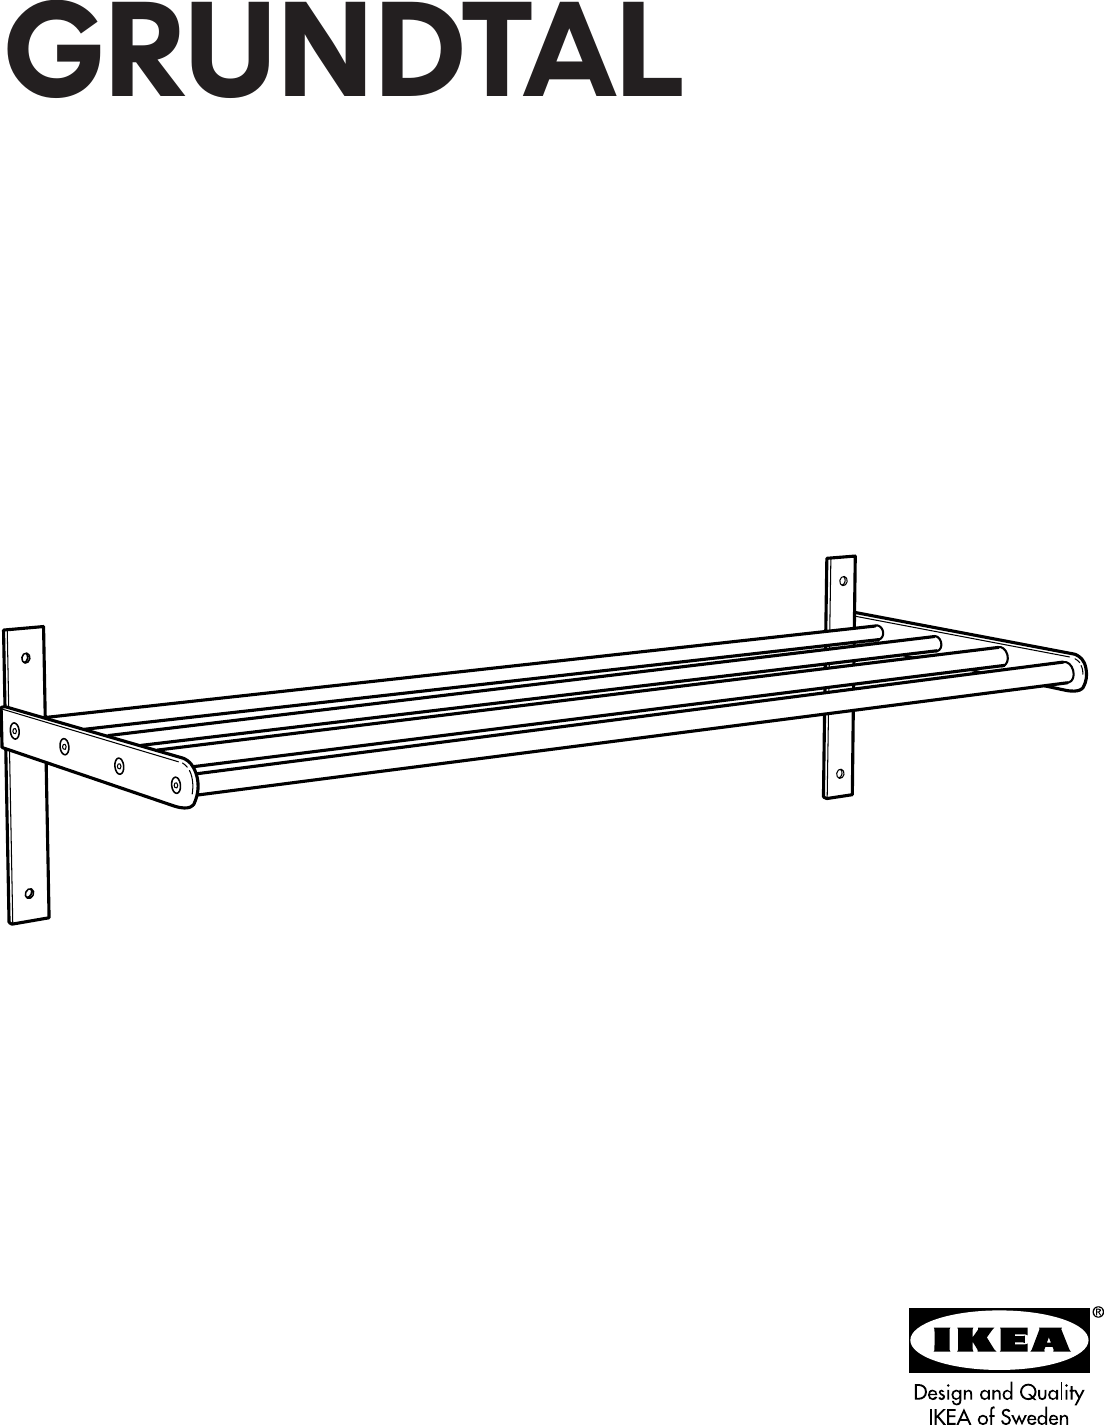 Page 1 of 4 - Ikea Ikea-Grundtal-Towel-Hanger-Shelf-Assembly-Instruction